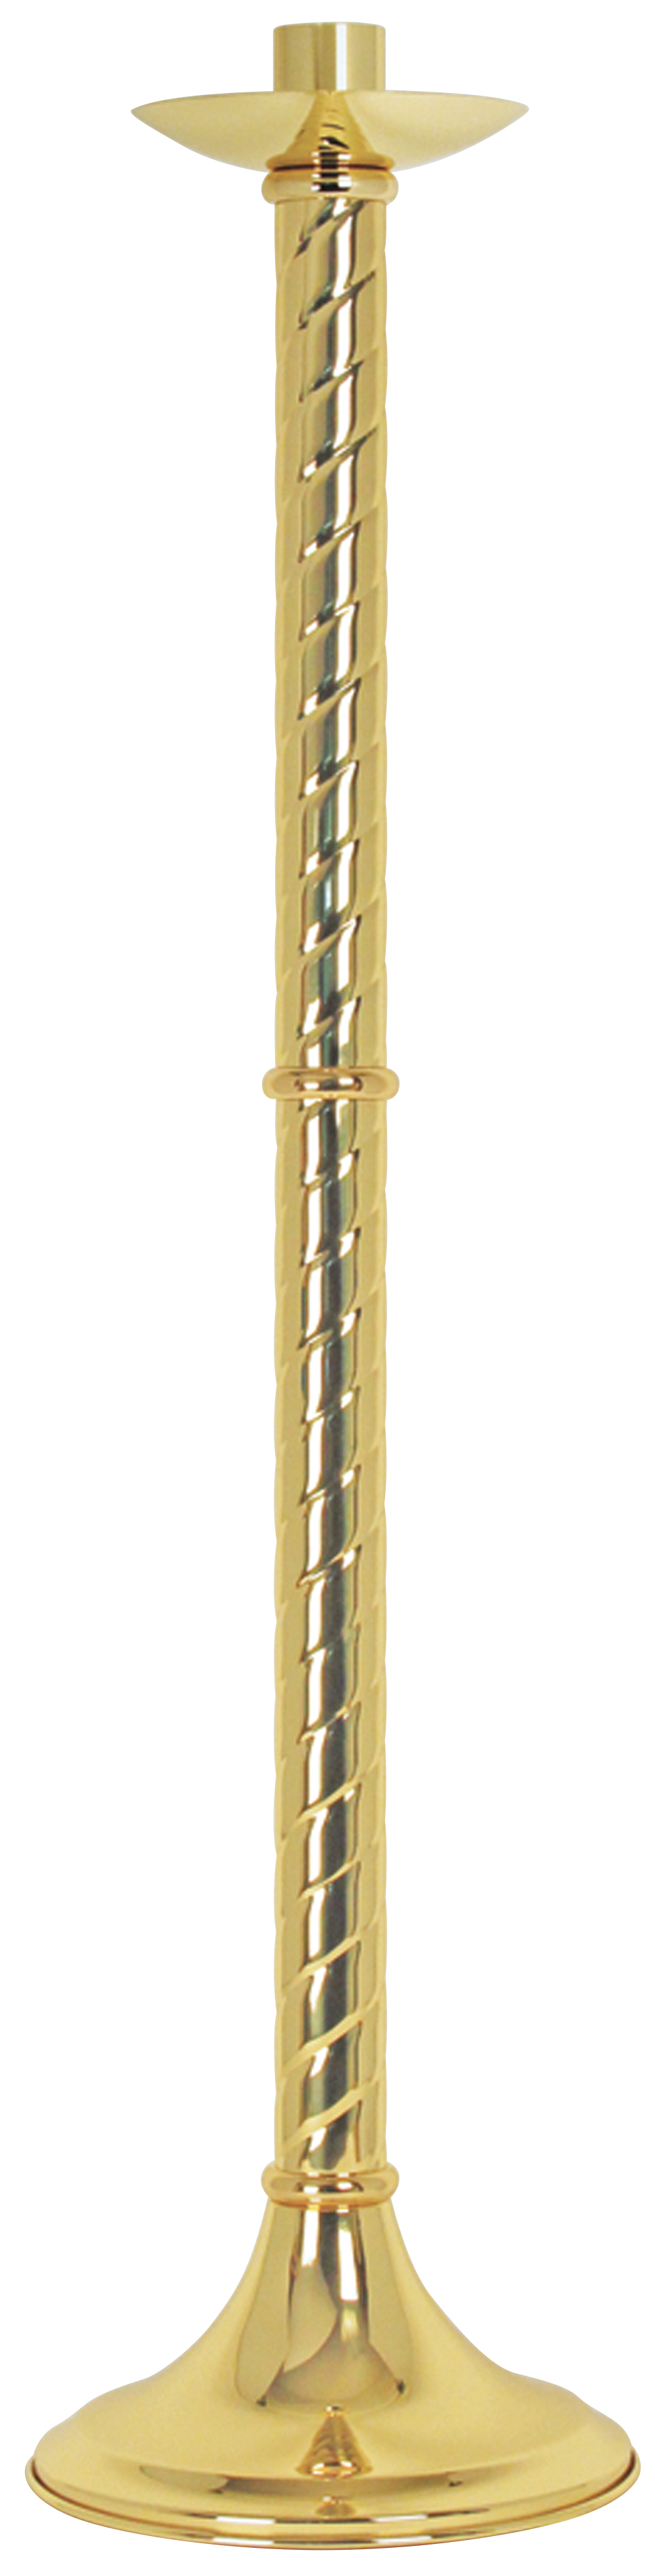 Paschal Candlestick 42 inch Helix Design 1 15/16 inch Socket